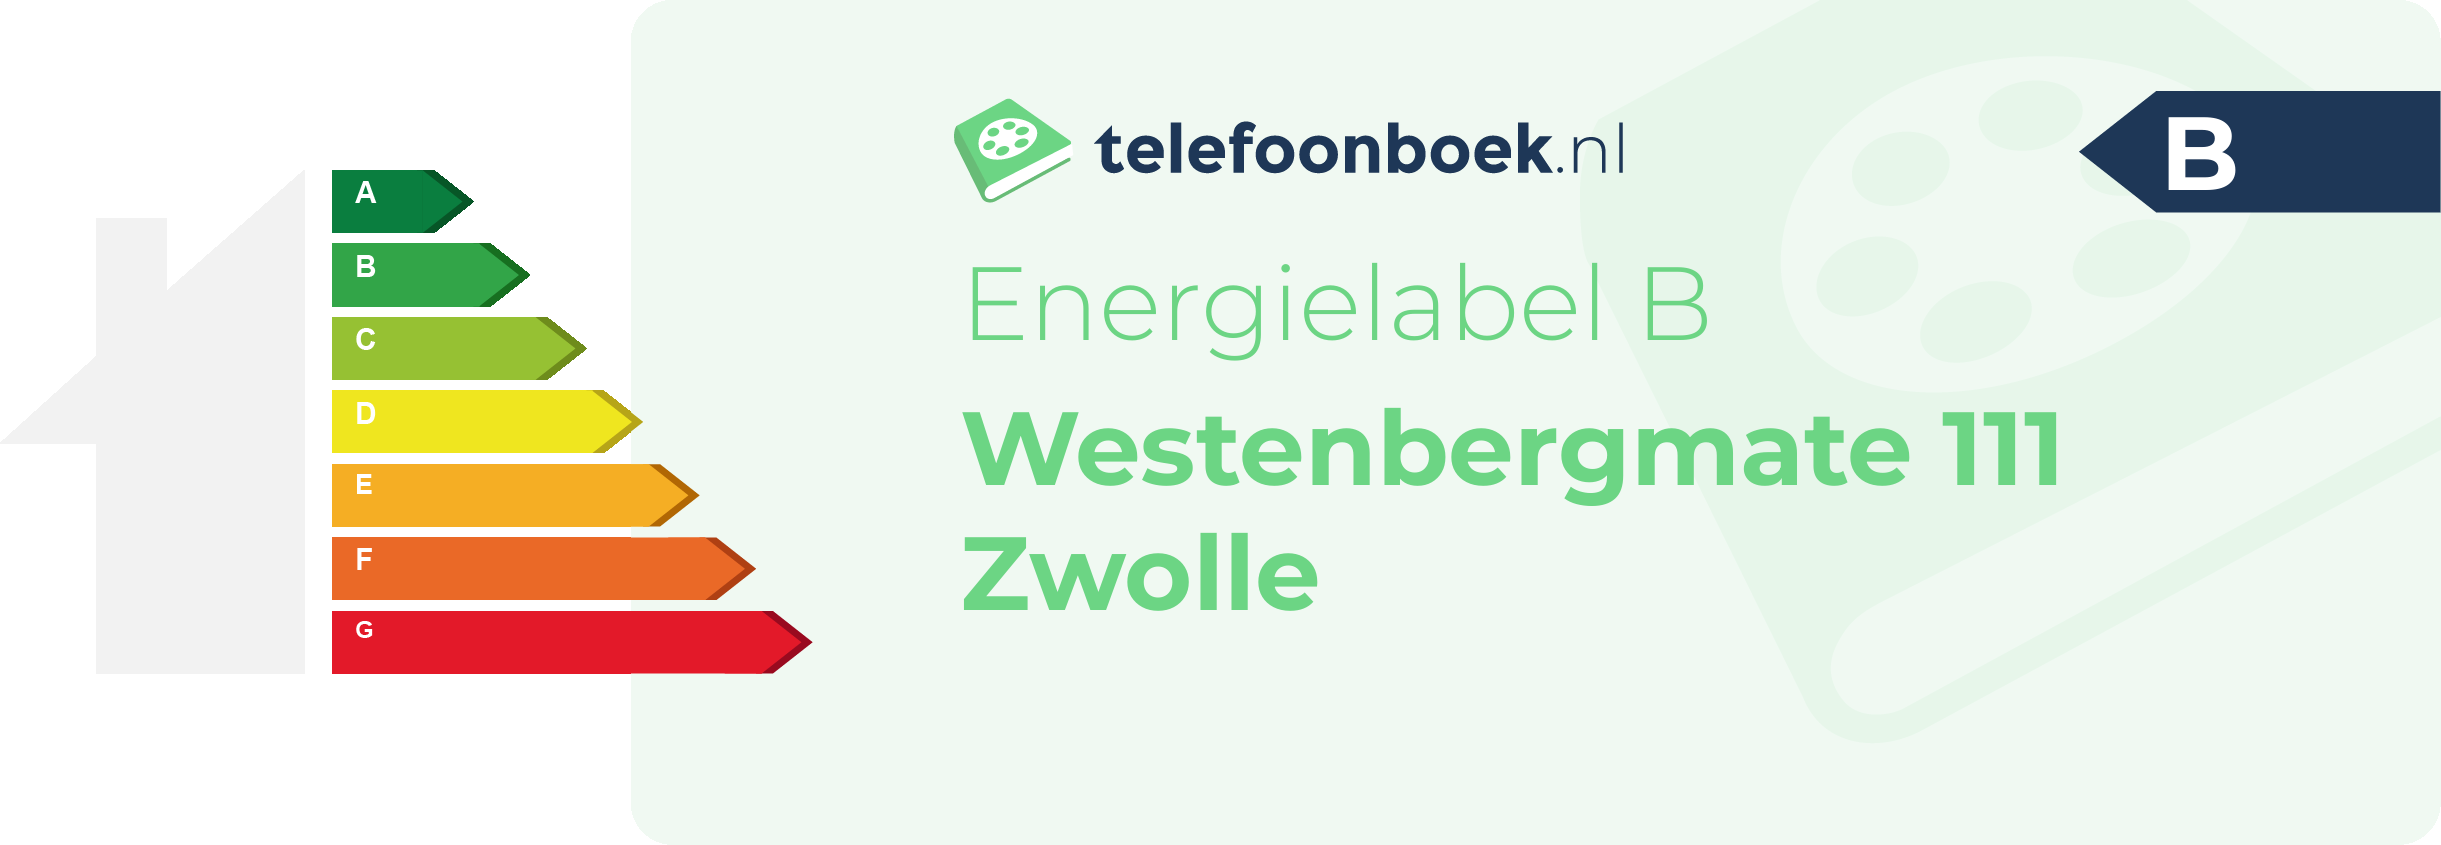 Energielabel Westenbergmate 111 Zwolle